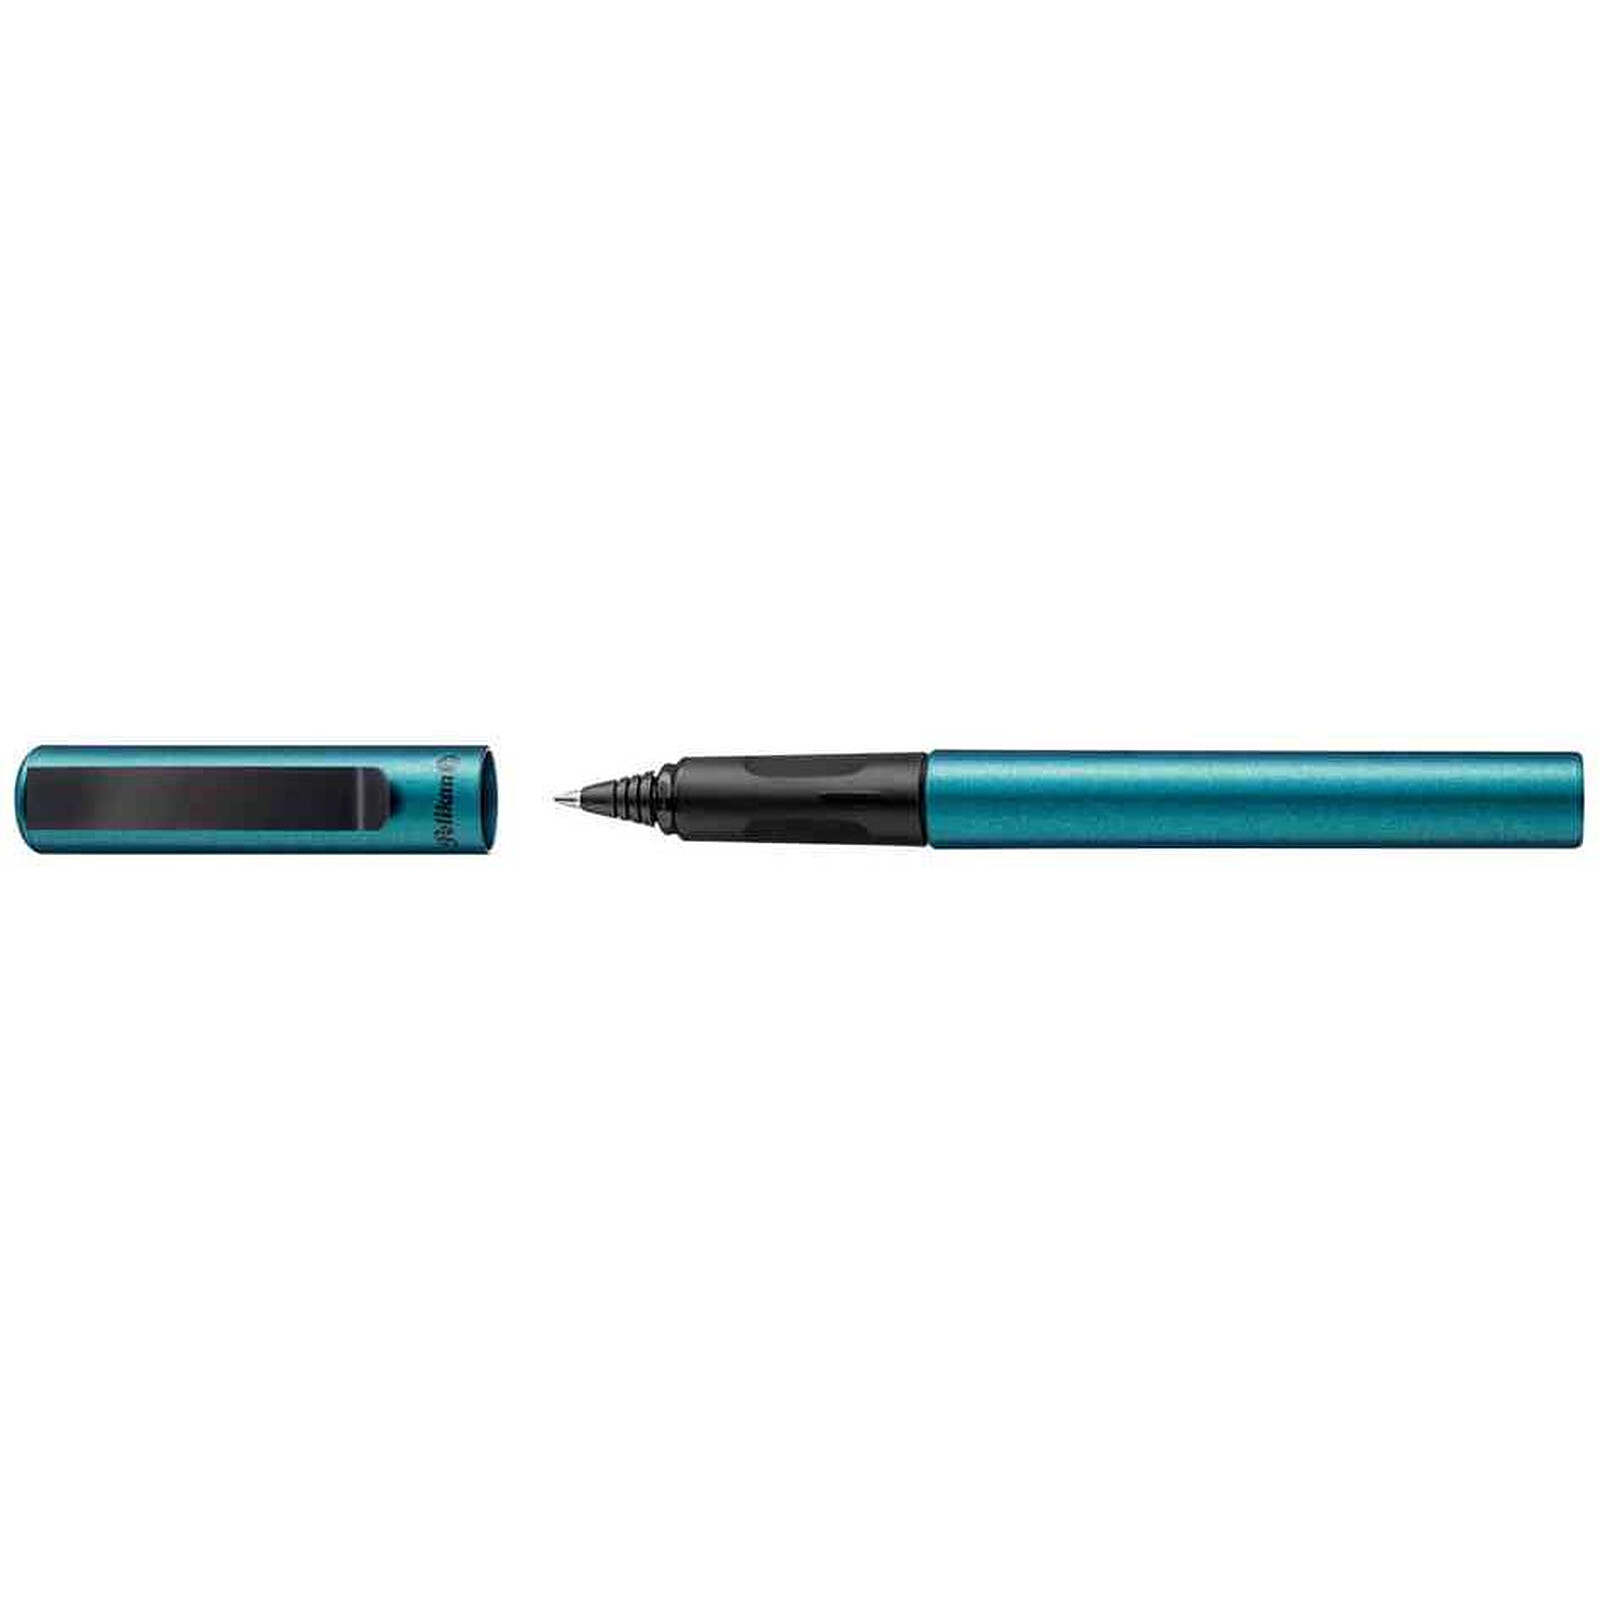 Recharge stylo-bille 337 - G2 - Noir - Pelikan